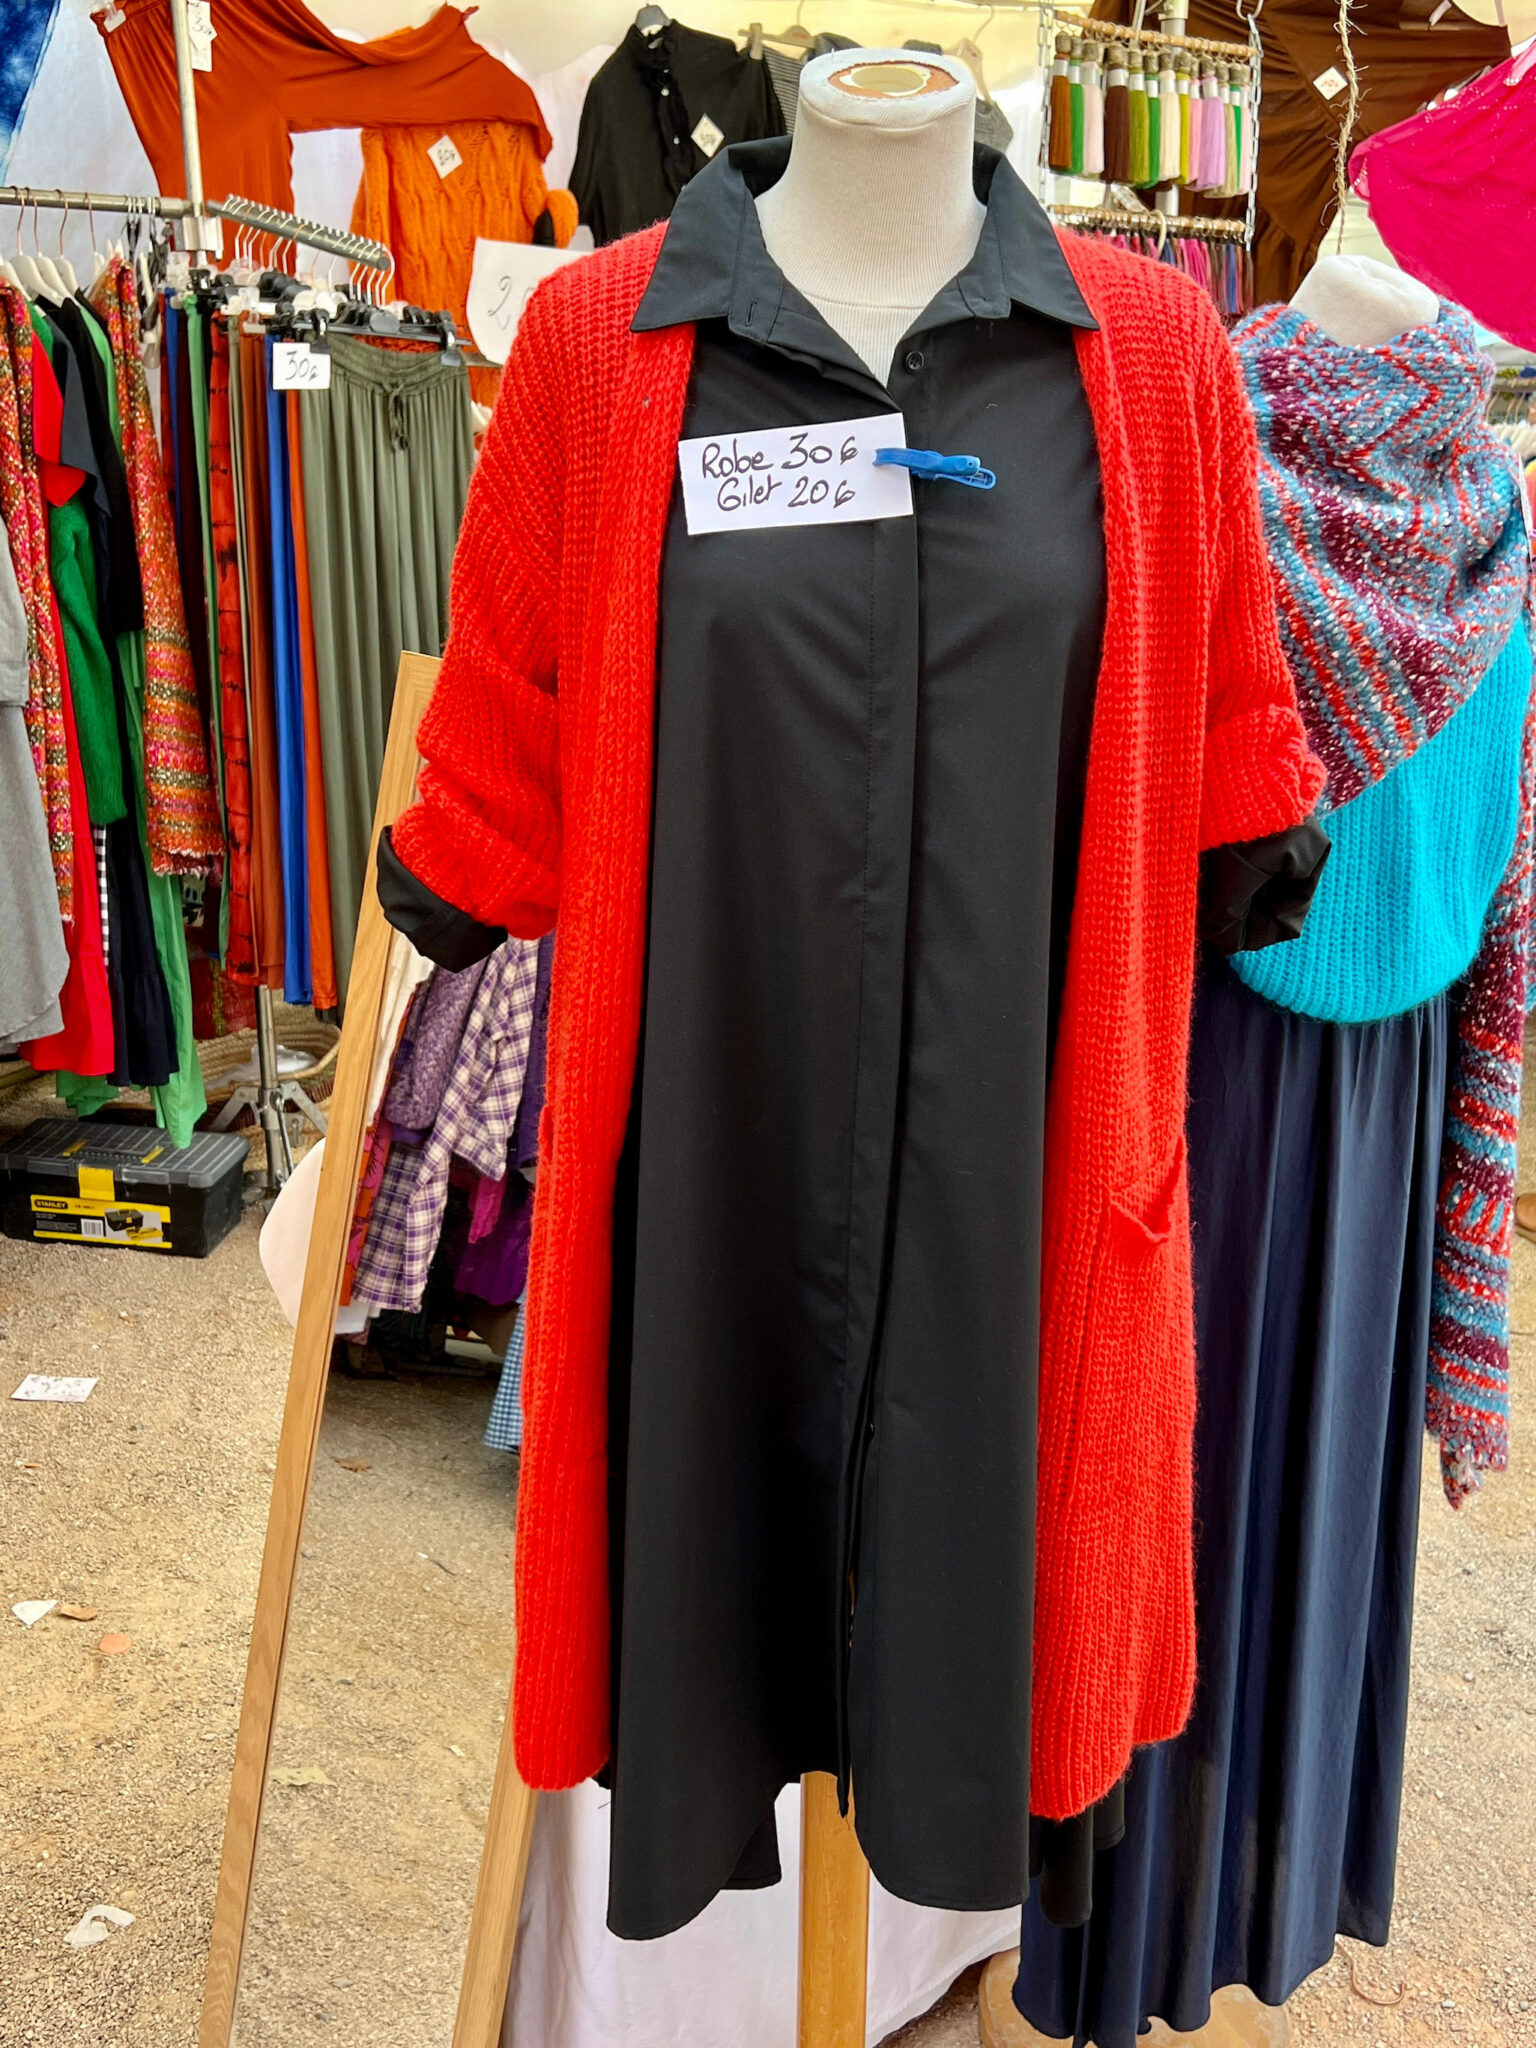 Red cardigan and black dress St.Tropez market